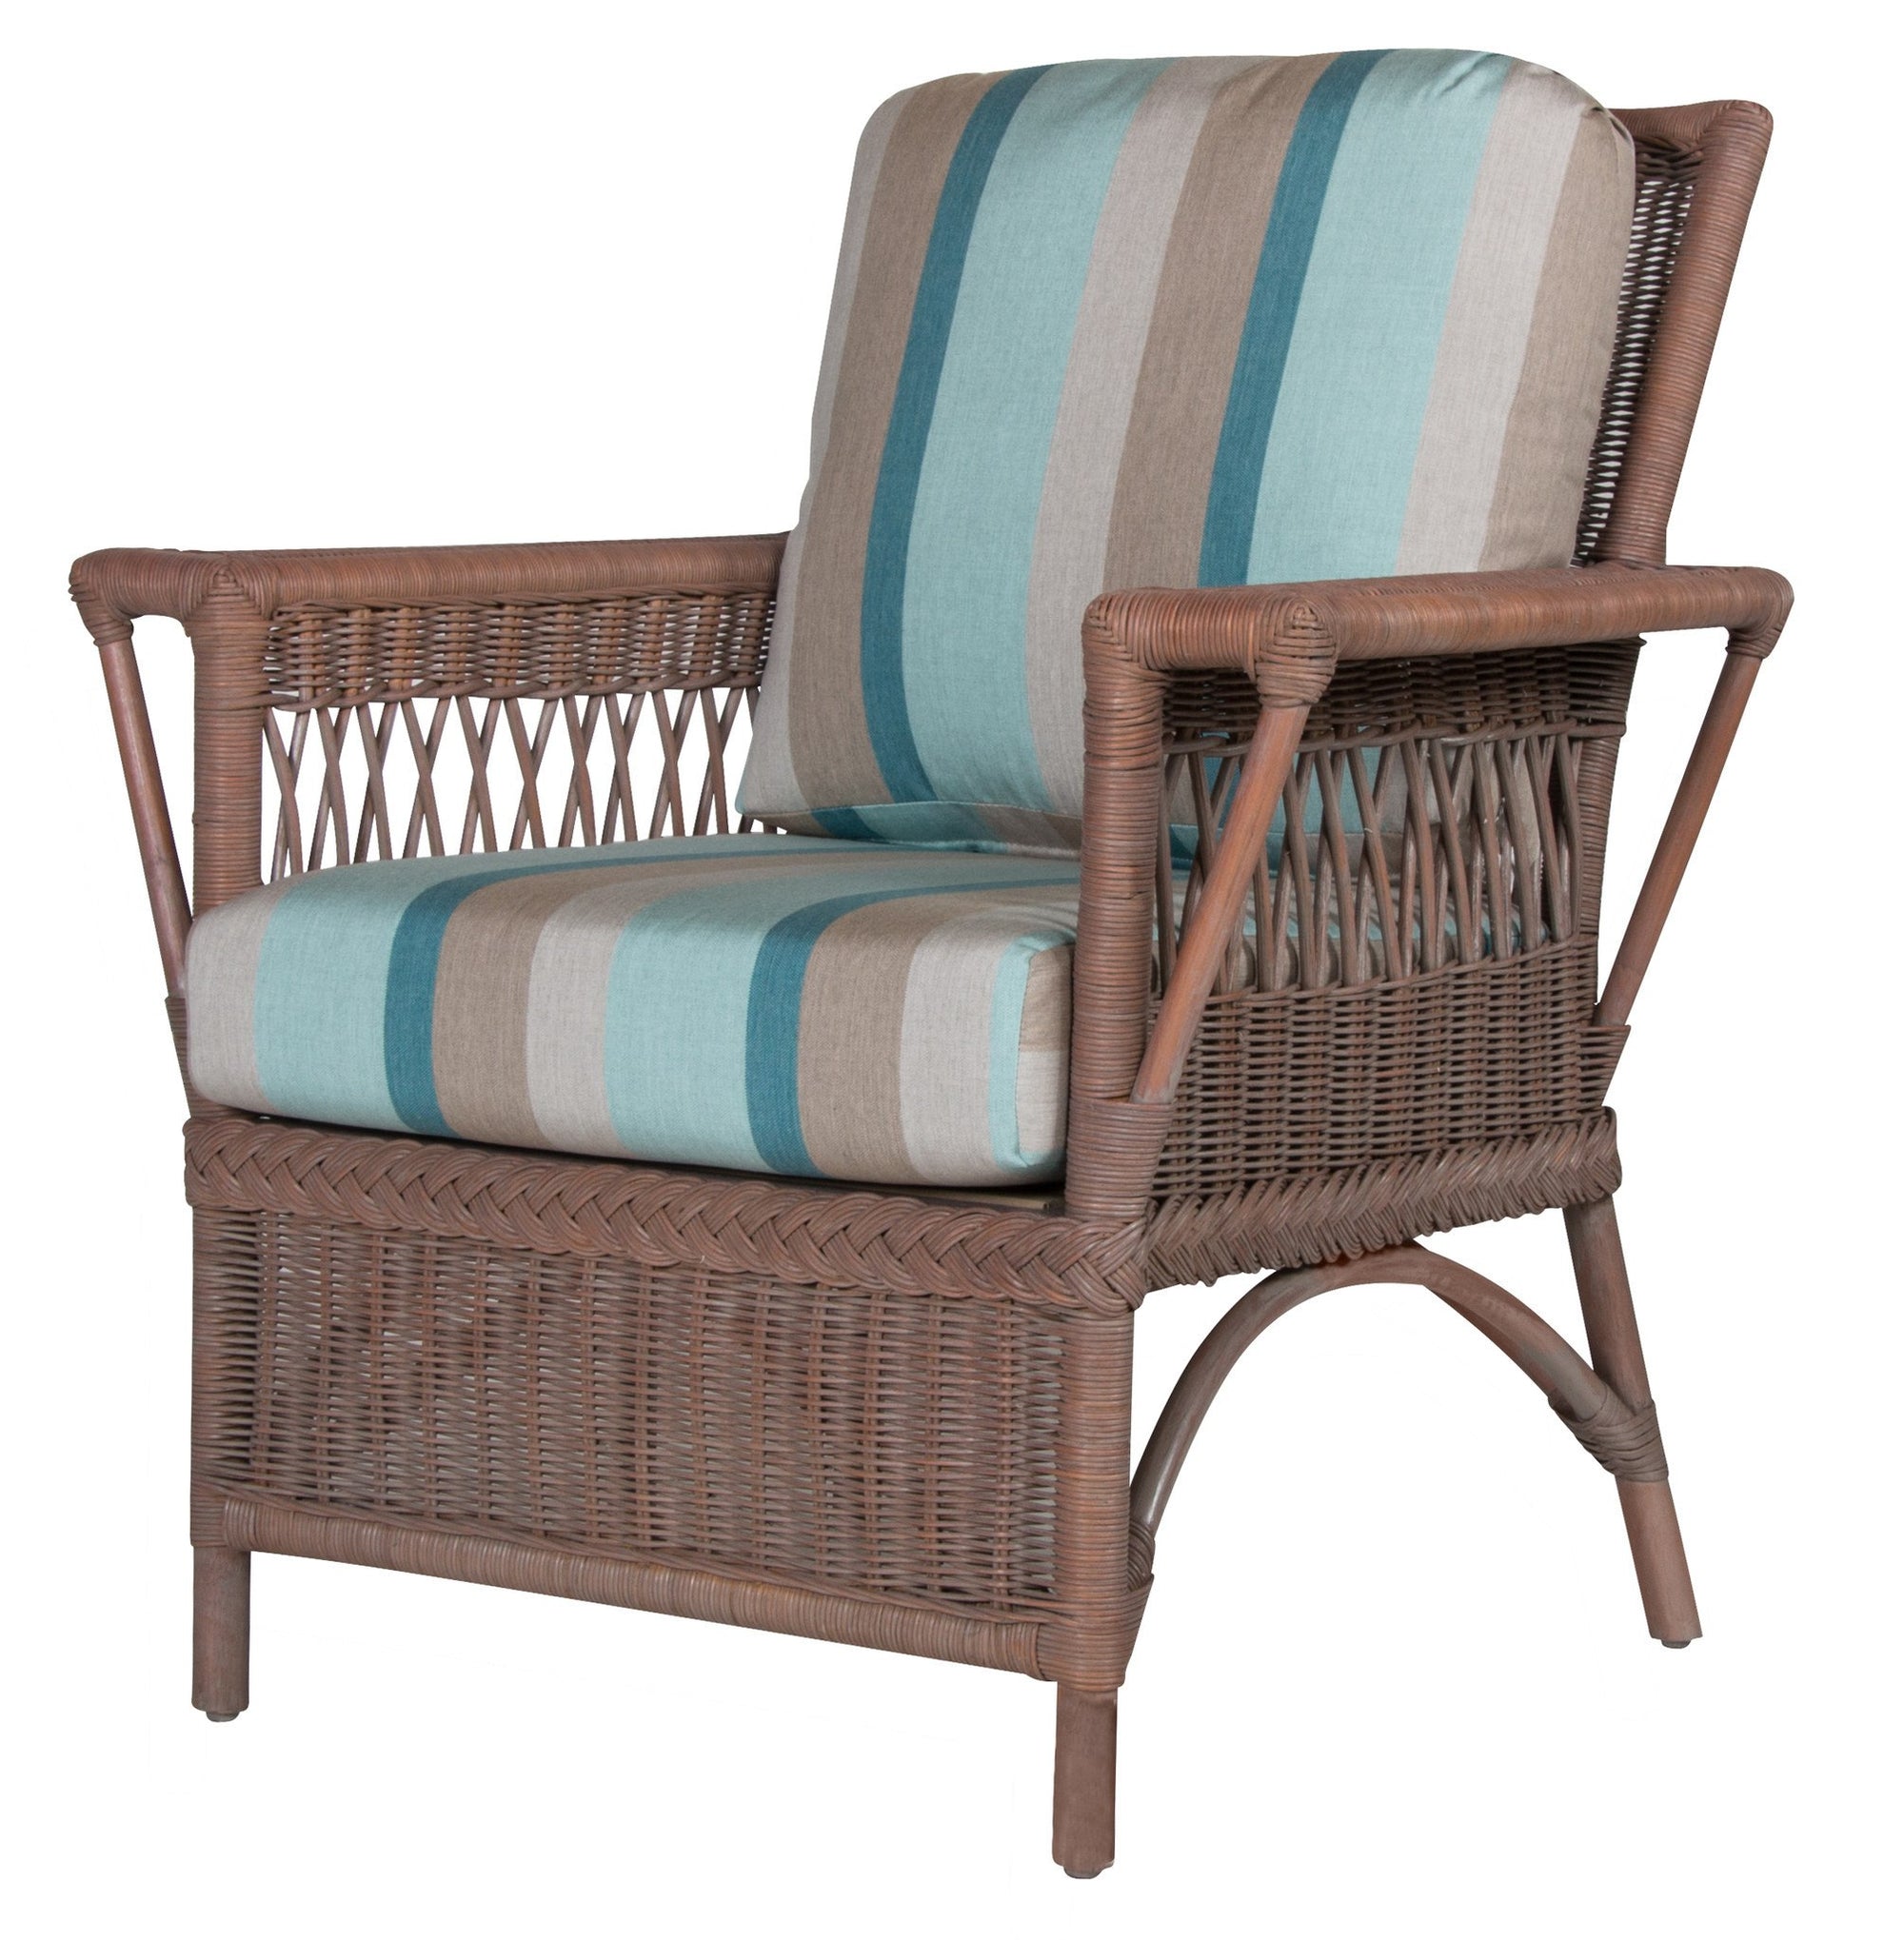 Designer Wicker & Rattan By Tribor Windsor Arm Chair by Design Wicker from Tribor Chair - Rattan Imports